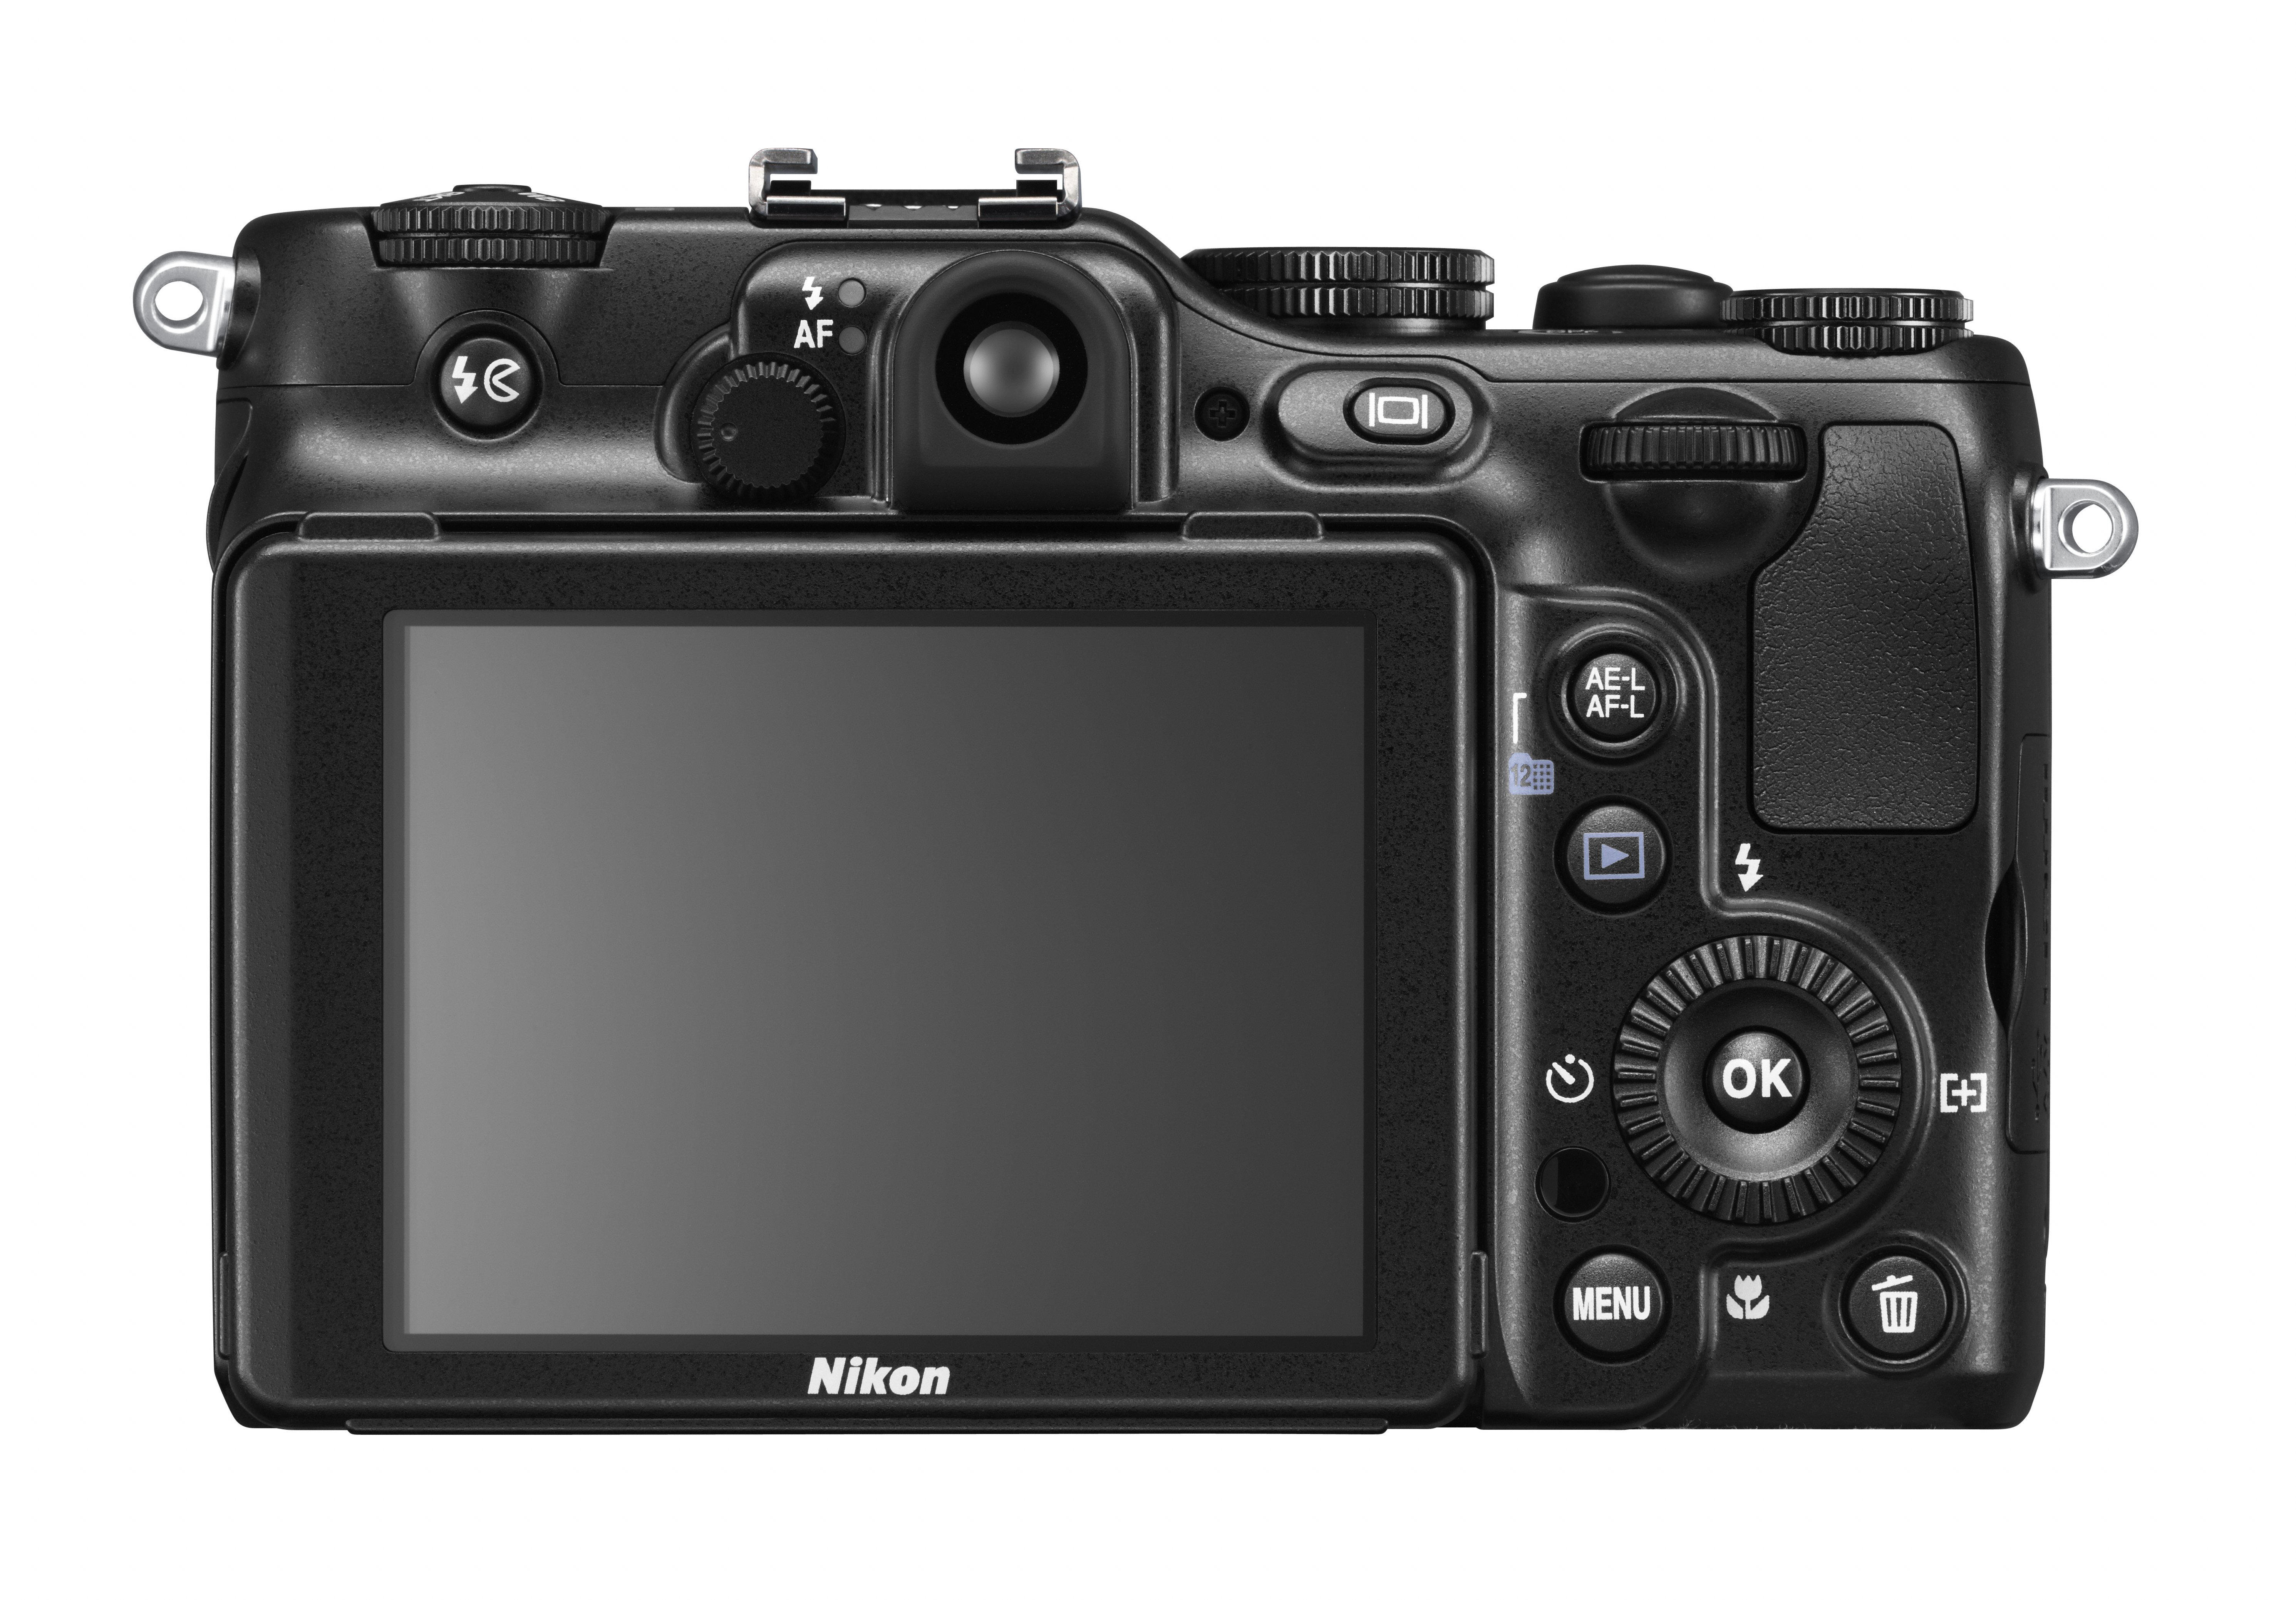 The New Nikon COOLPIX P7100 